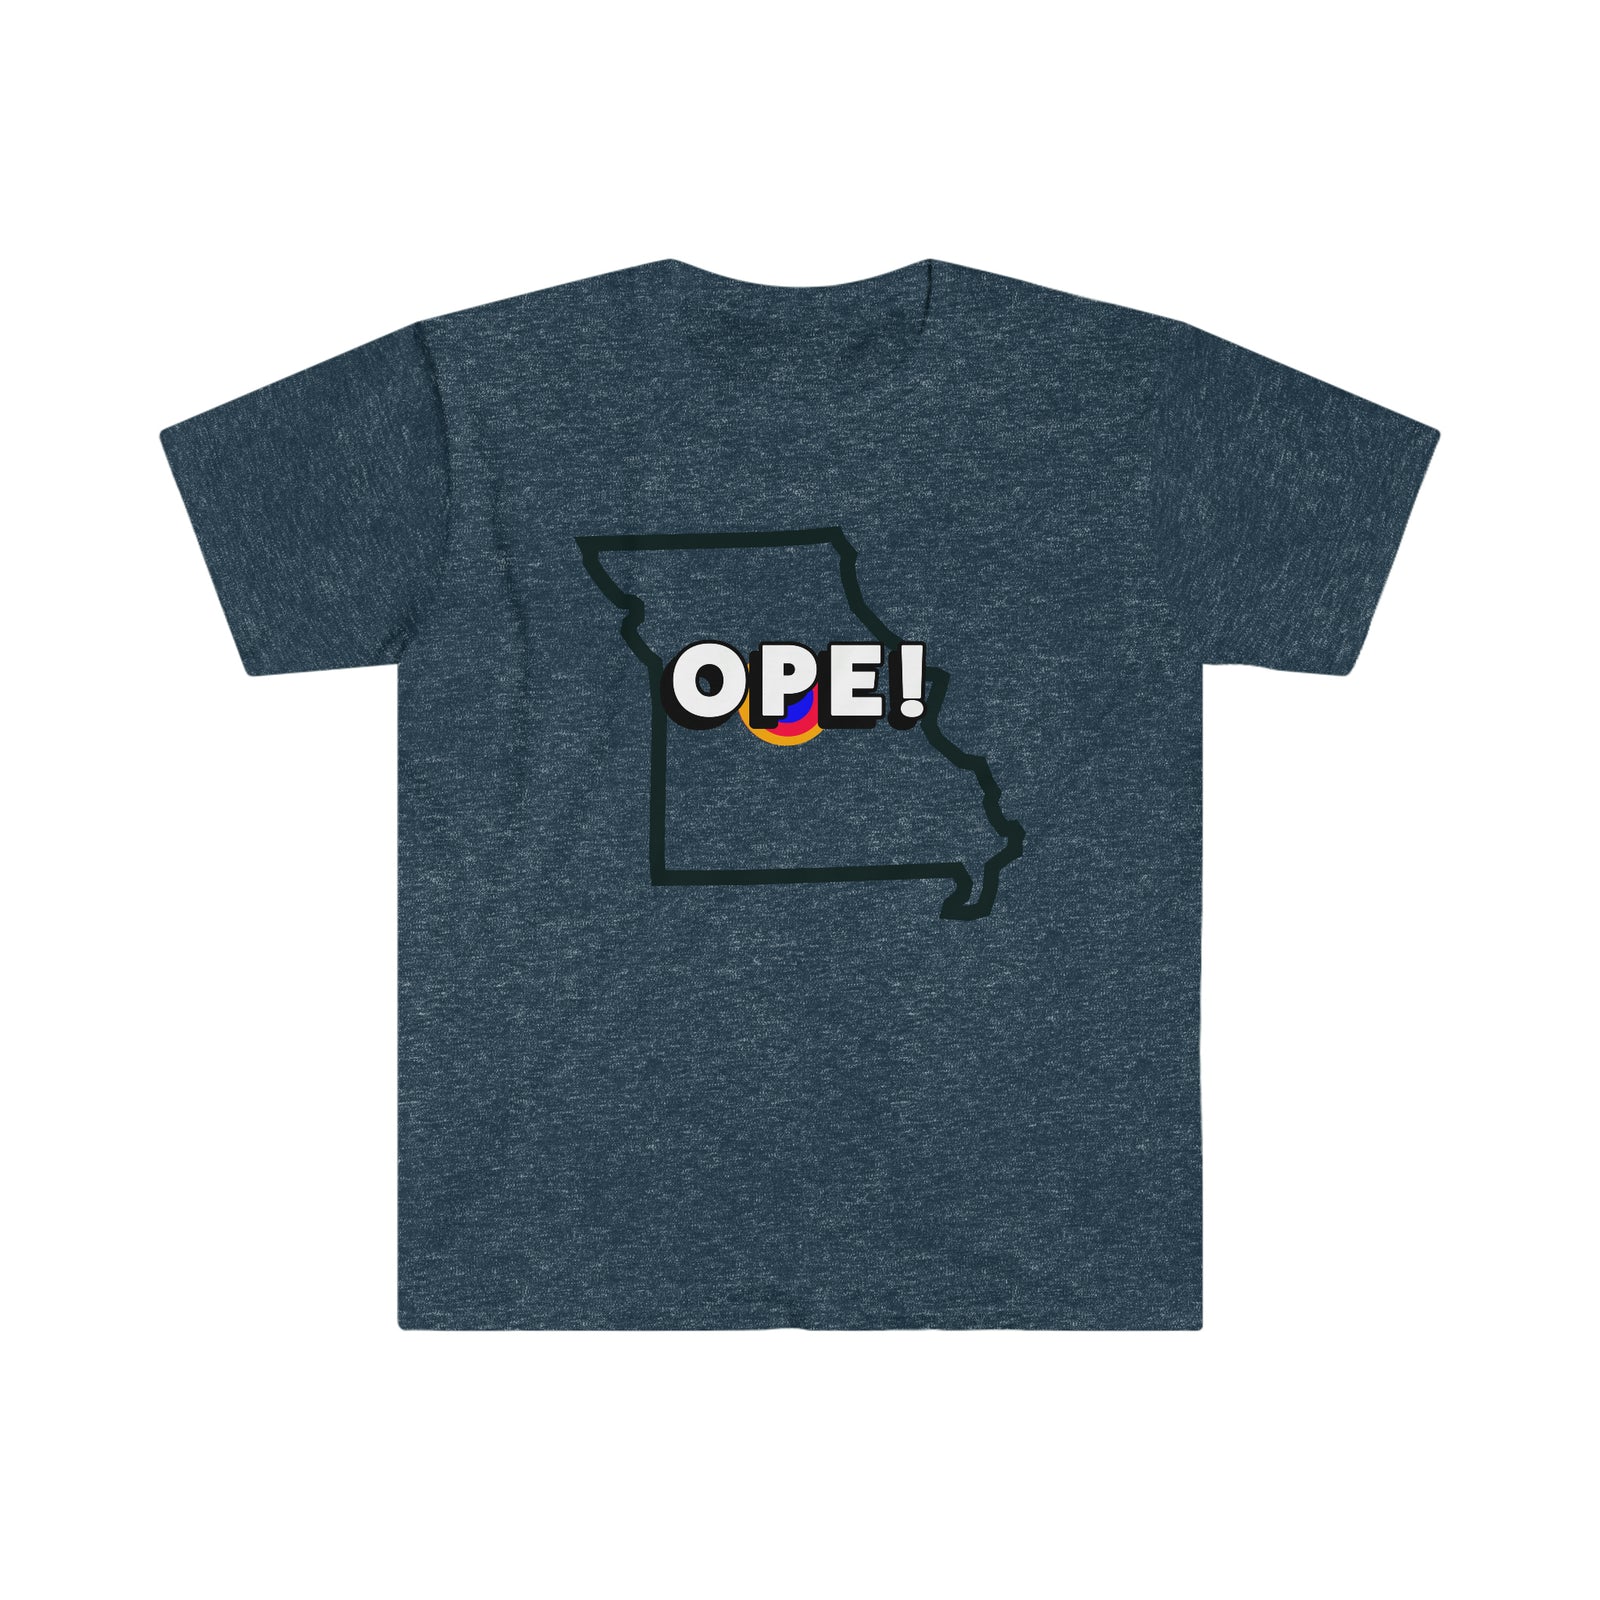 Ope! Missouri T-Shirt